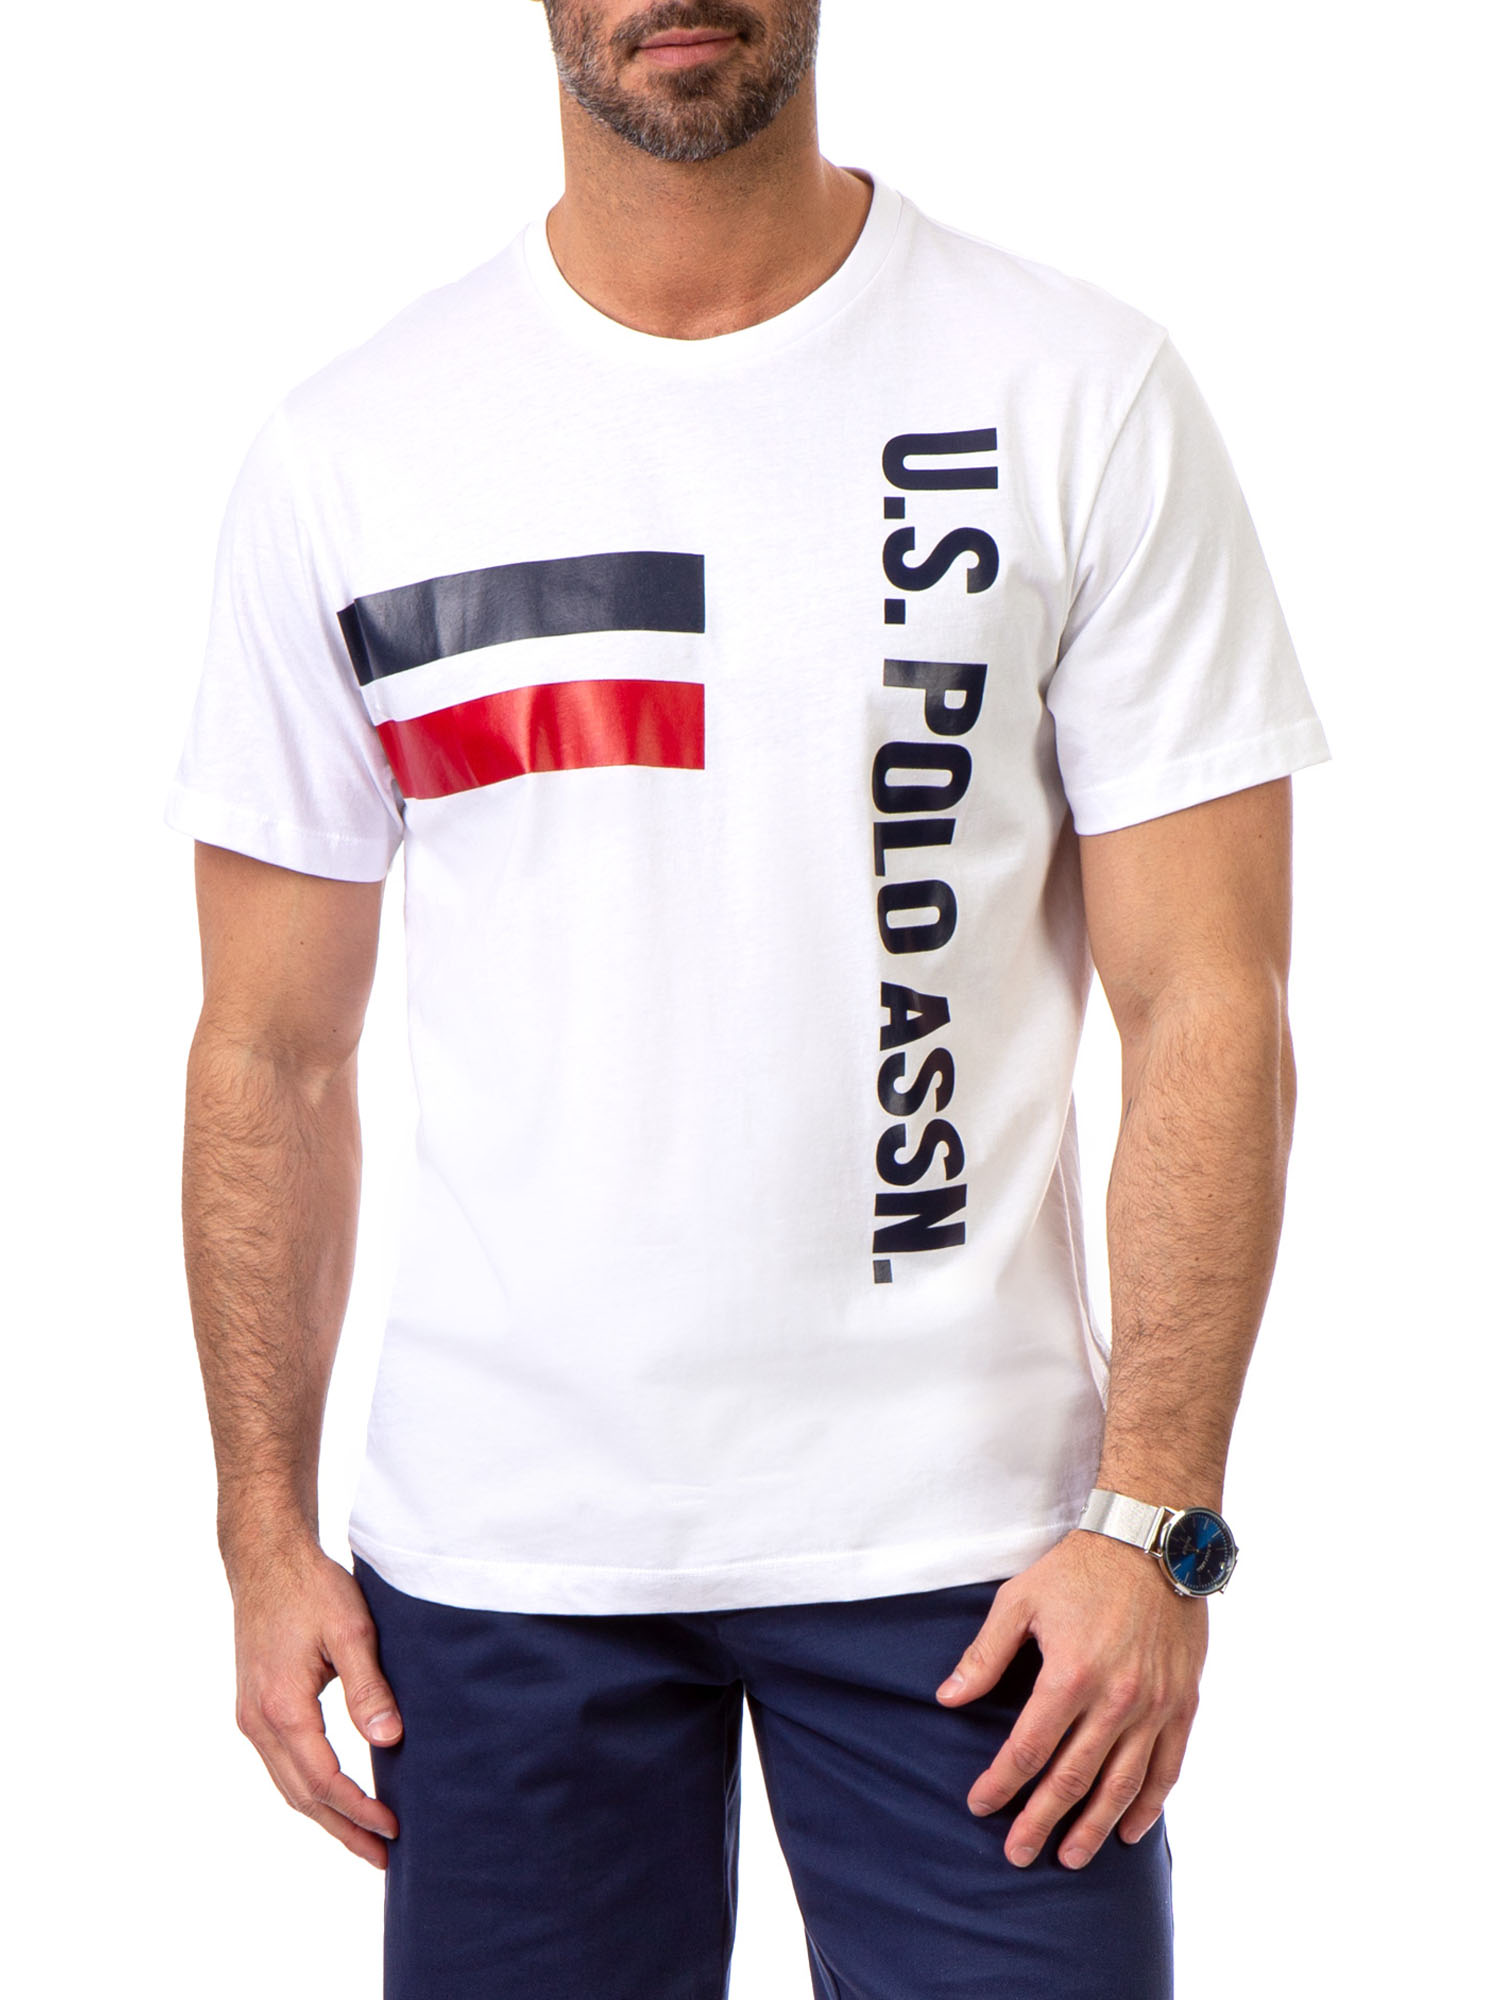 U.S. Polo Assn. Men's Short Sleeve Printed T-Shirt - image 1 of 4